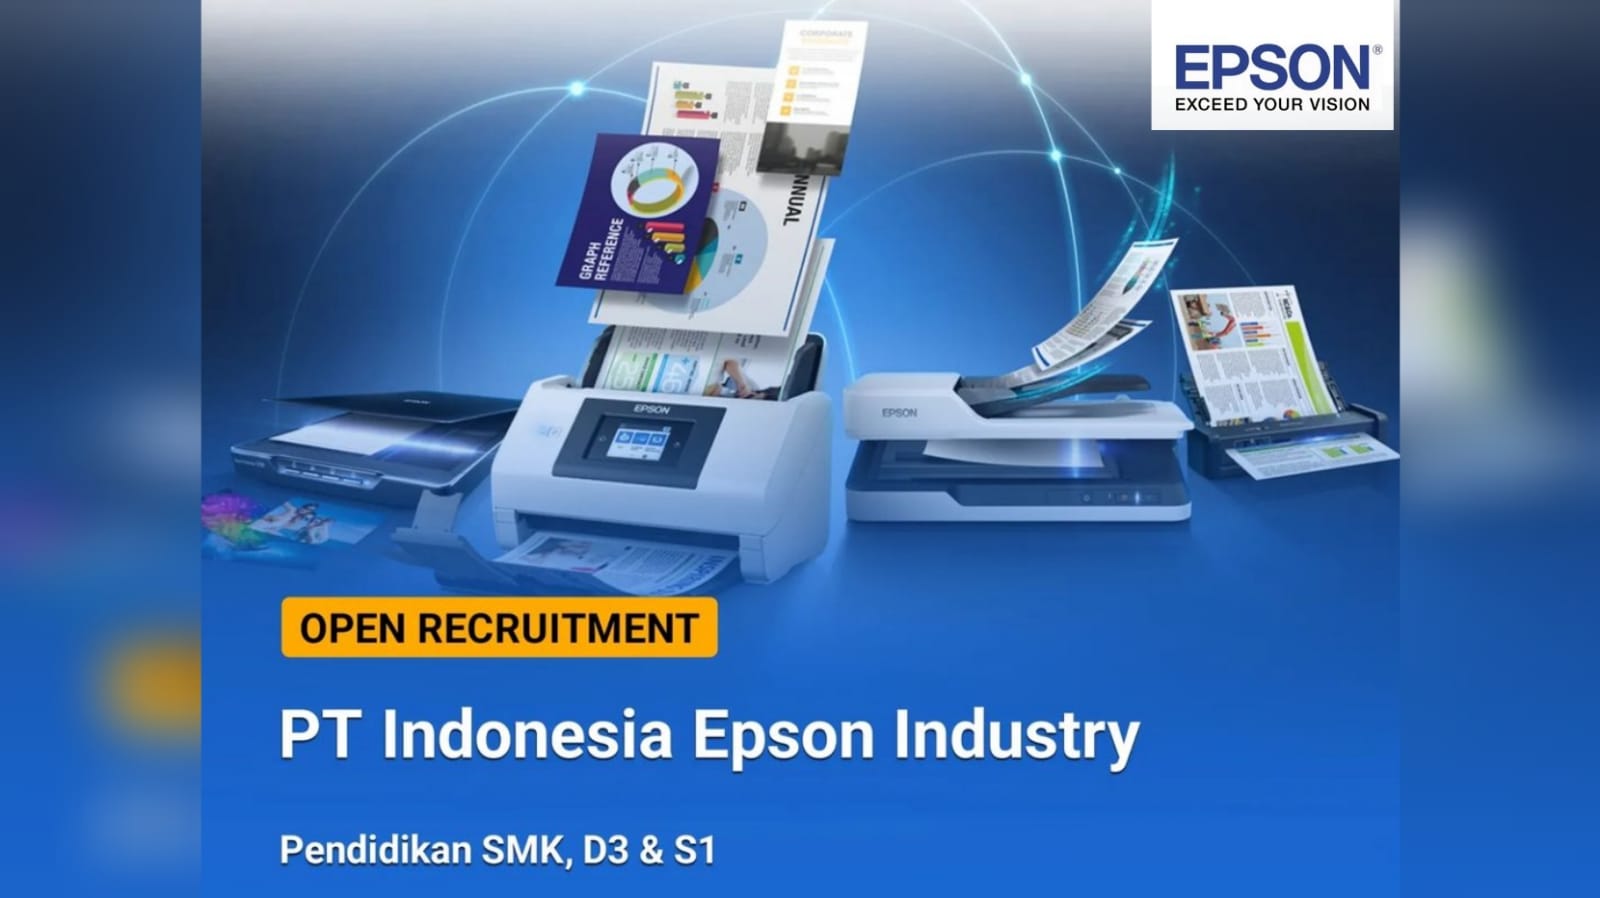 12 lowongan Kerja Terbaru PT Indonesia Epson Industry untuk Lulusan D3 dan S1 Berbagai Jurusan, Cek di Sini